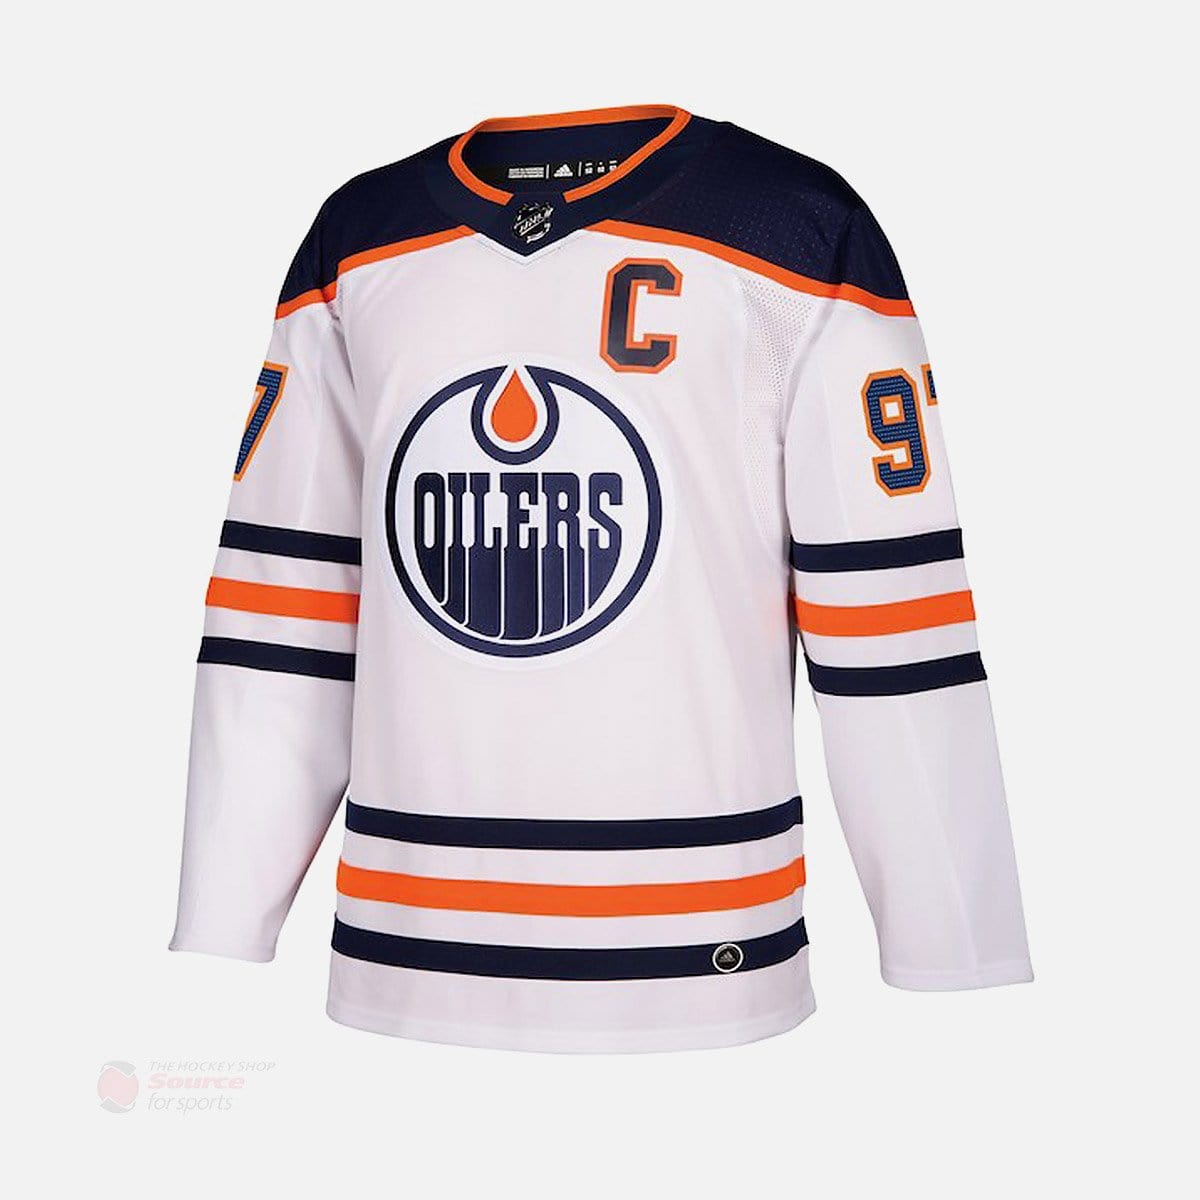 Edmonton Oilers Away Adidas Authentic Senior Jersey - Connor McDavid